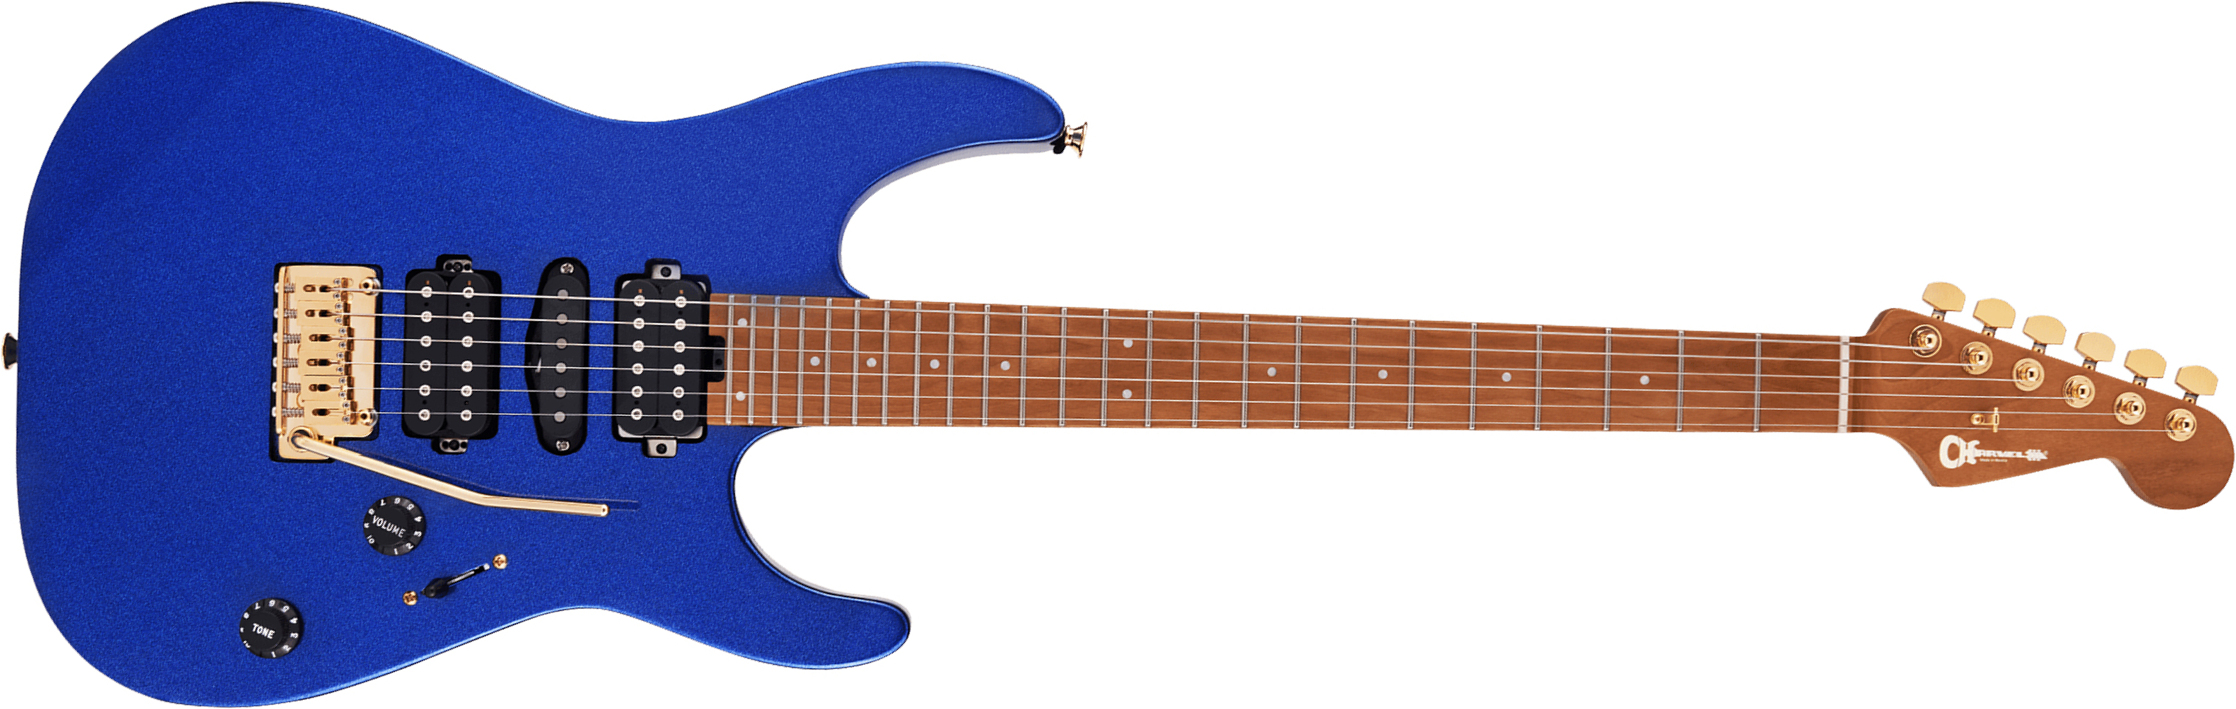 Charvel Dinky Dk24 Hsh 2pt Cm Pro-mod Seymour Duncan Trem Mn - Mystic Blue - E-Gitarre in Str-Form - Main picture